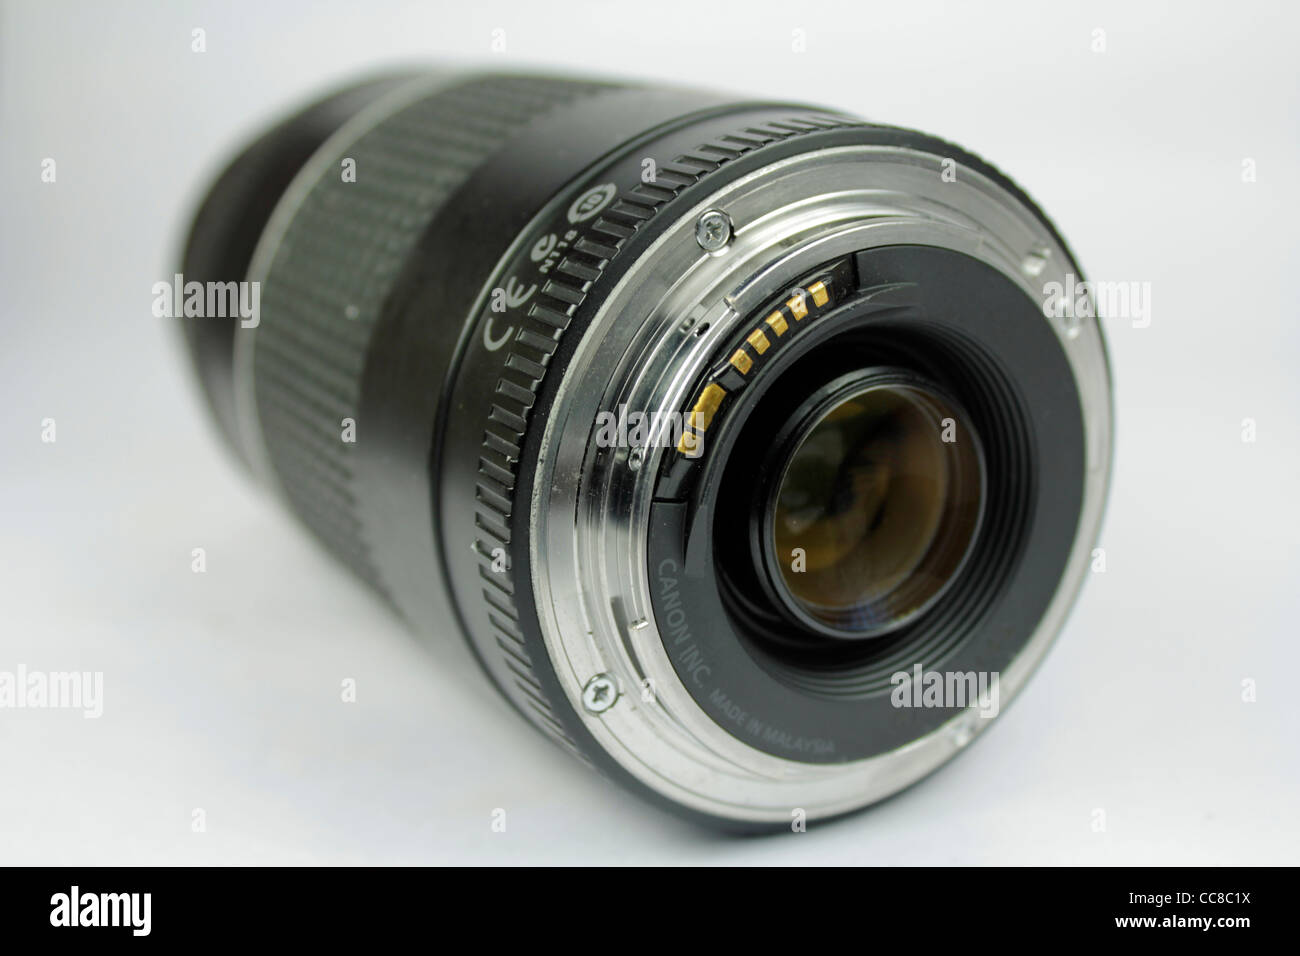 Canon 70-300 mm telephoto lens Stock Photo